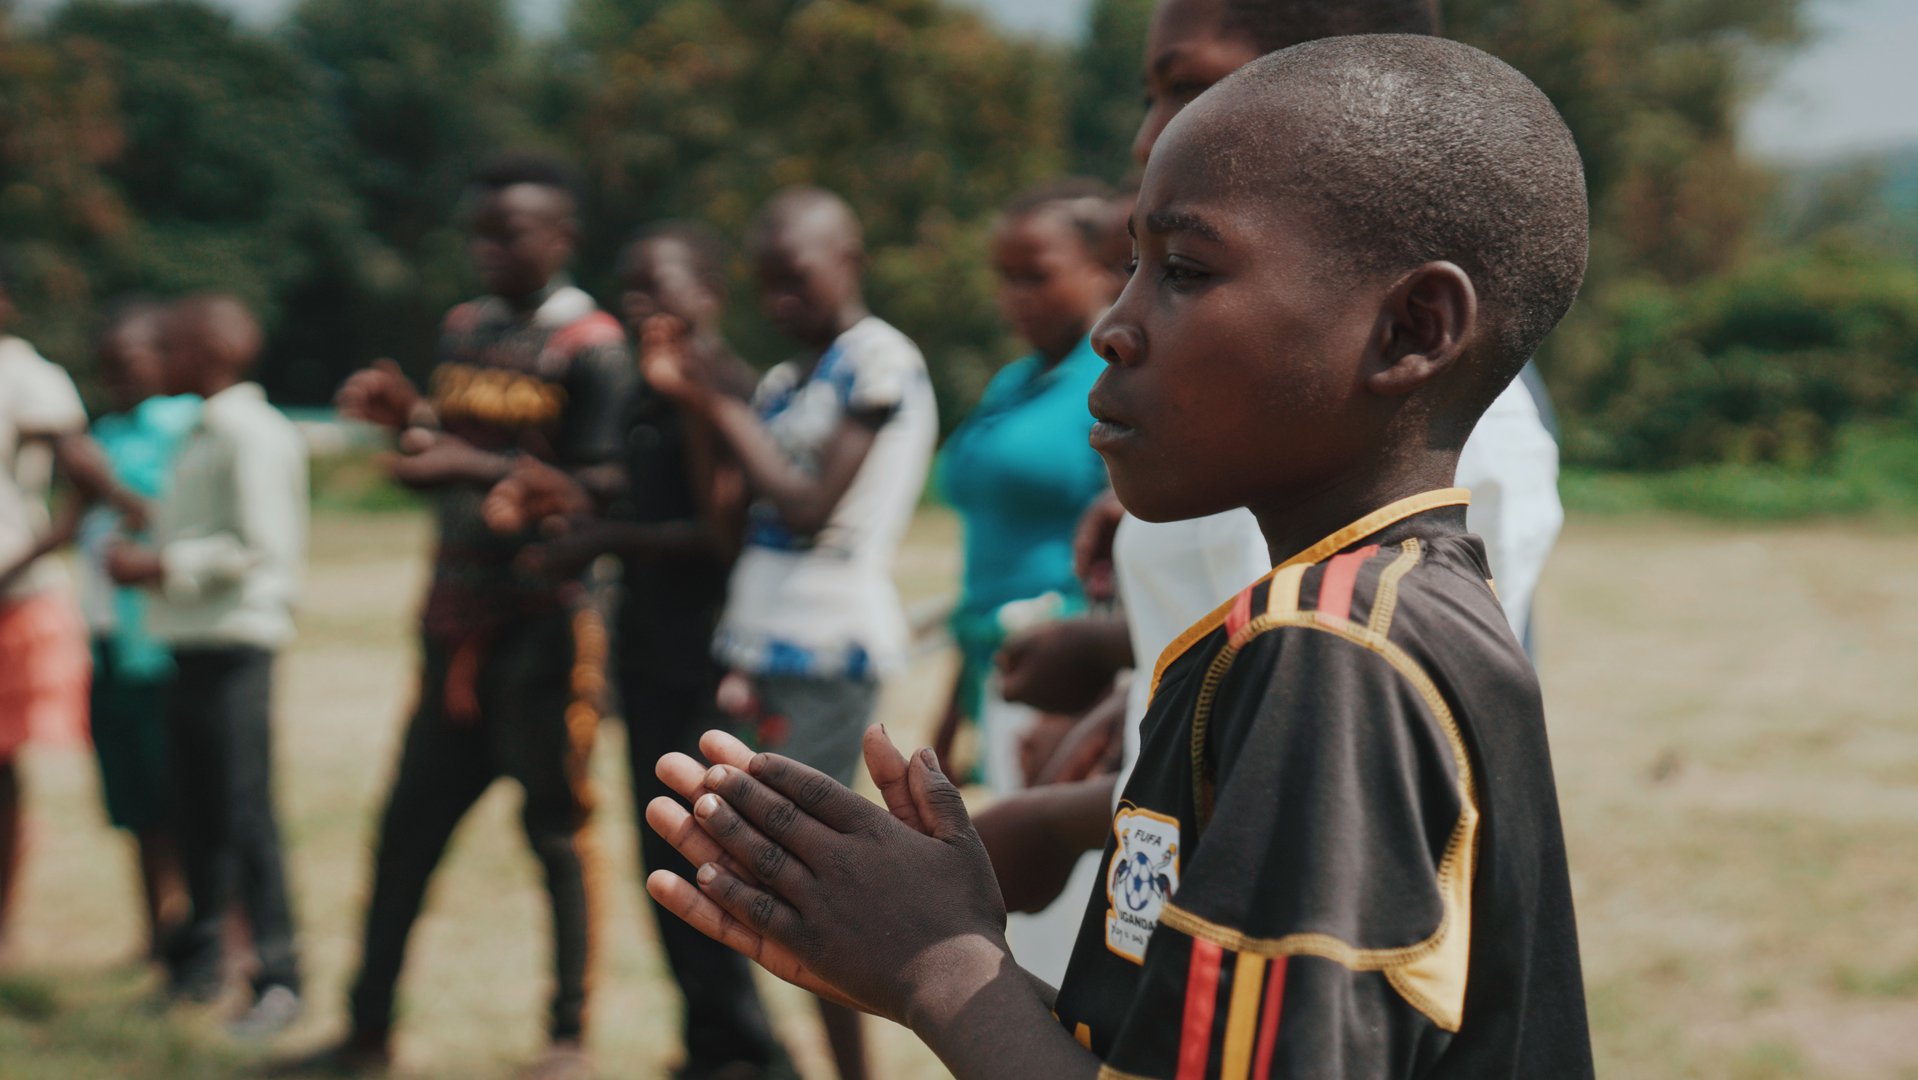 Burundi refugee Roger now participates in TeamUp - War Child